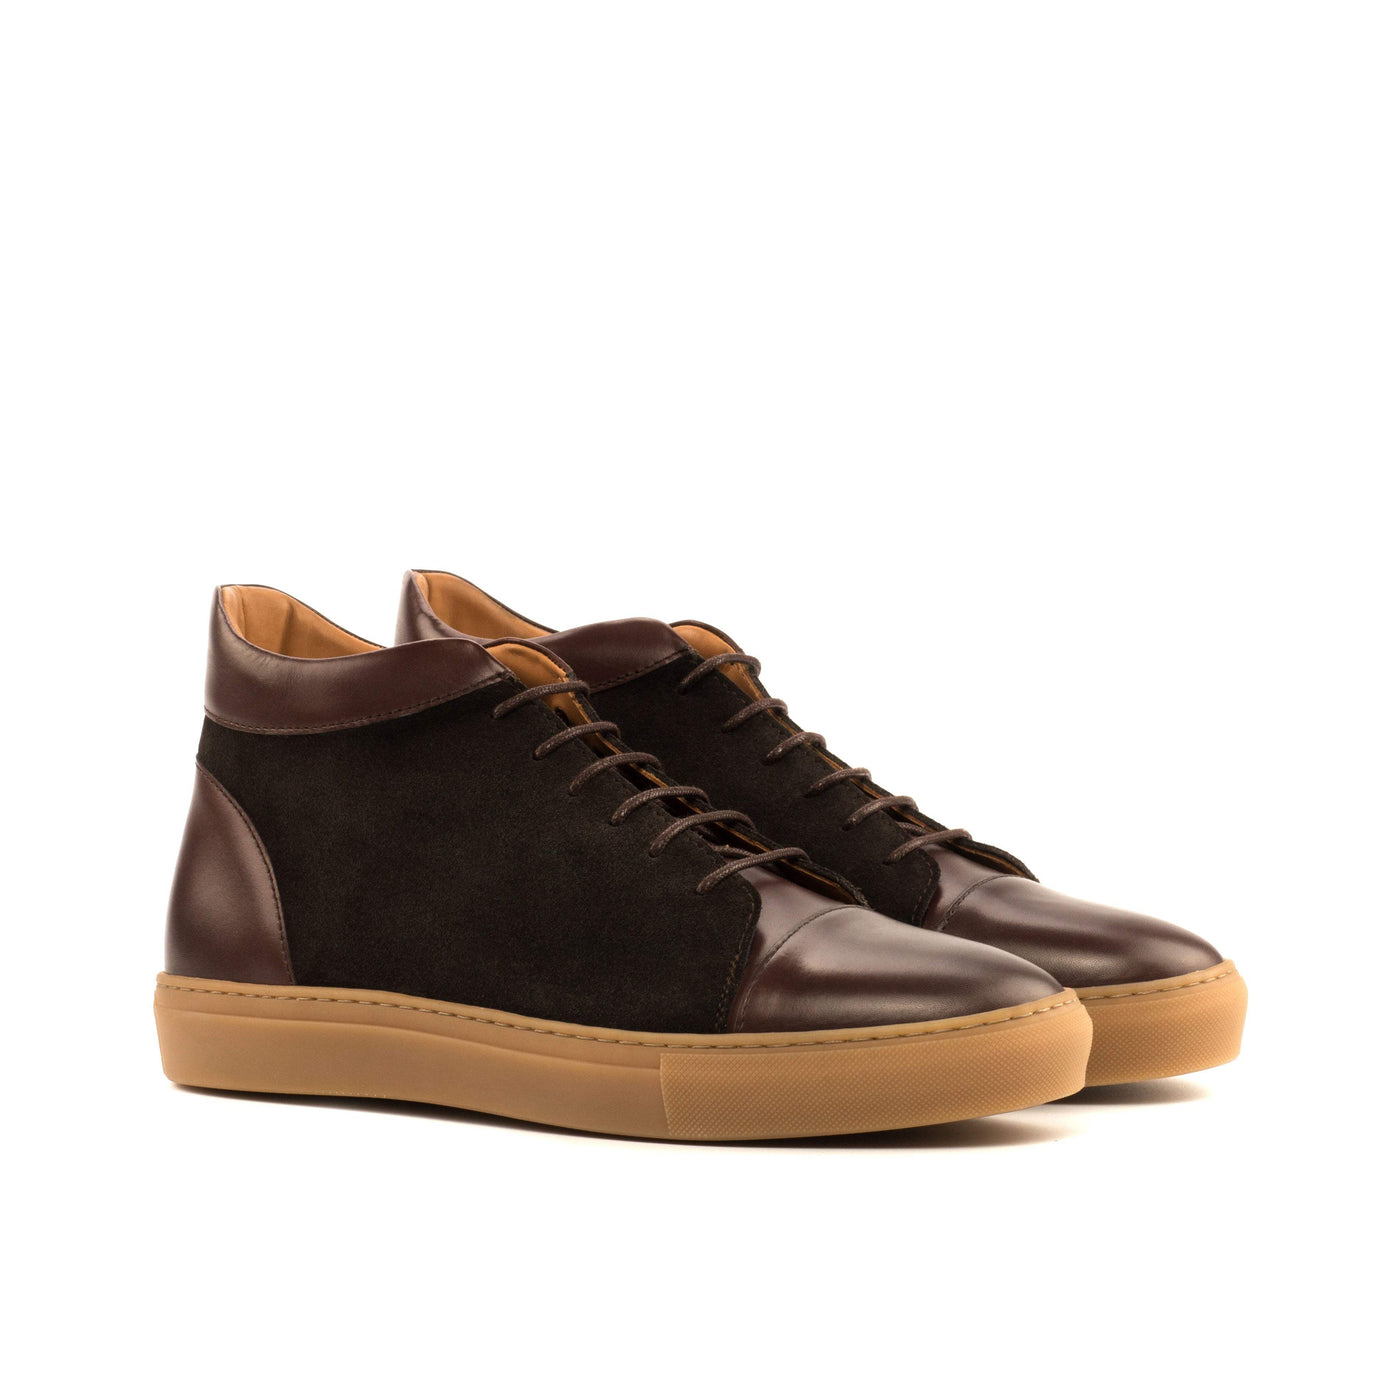 Men's High Top Sneakers Leather Dark Brown 4010 3- MERRIMIUM